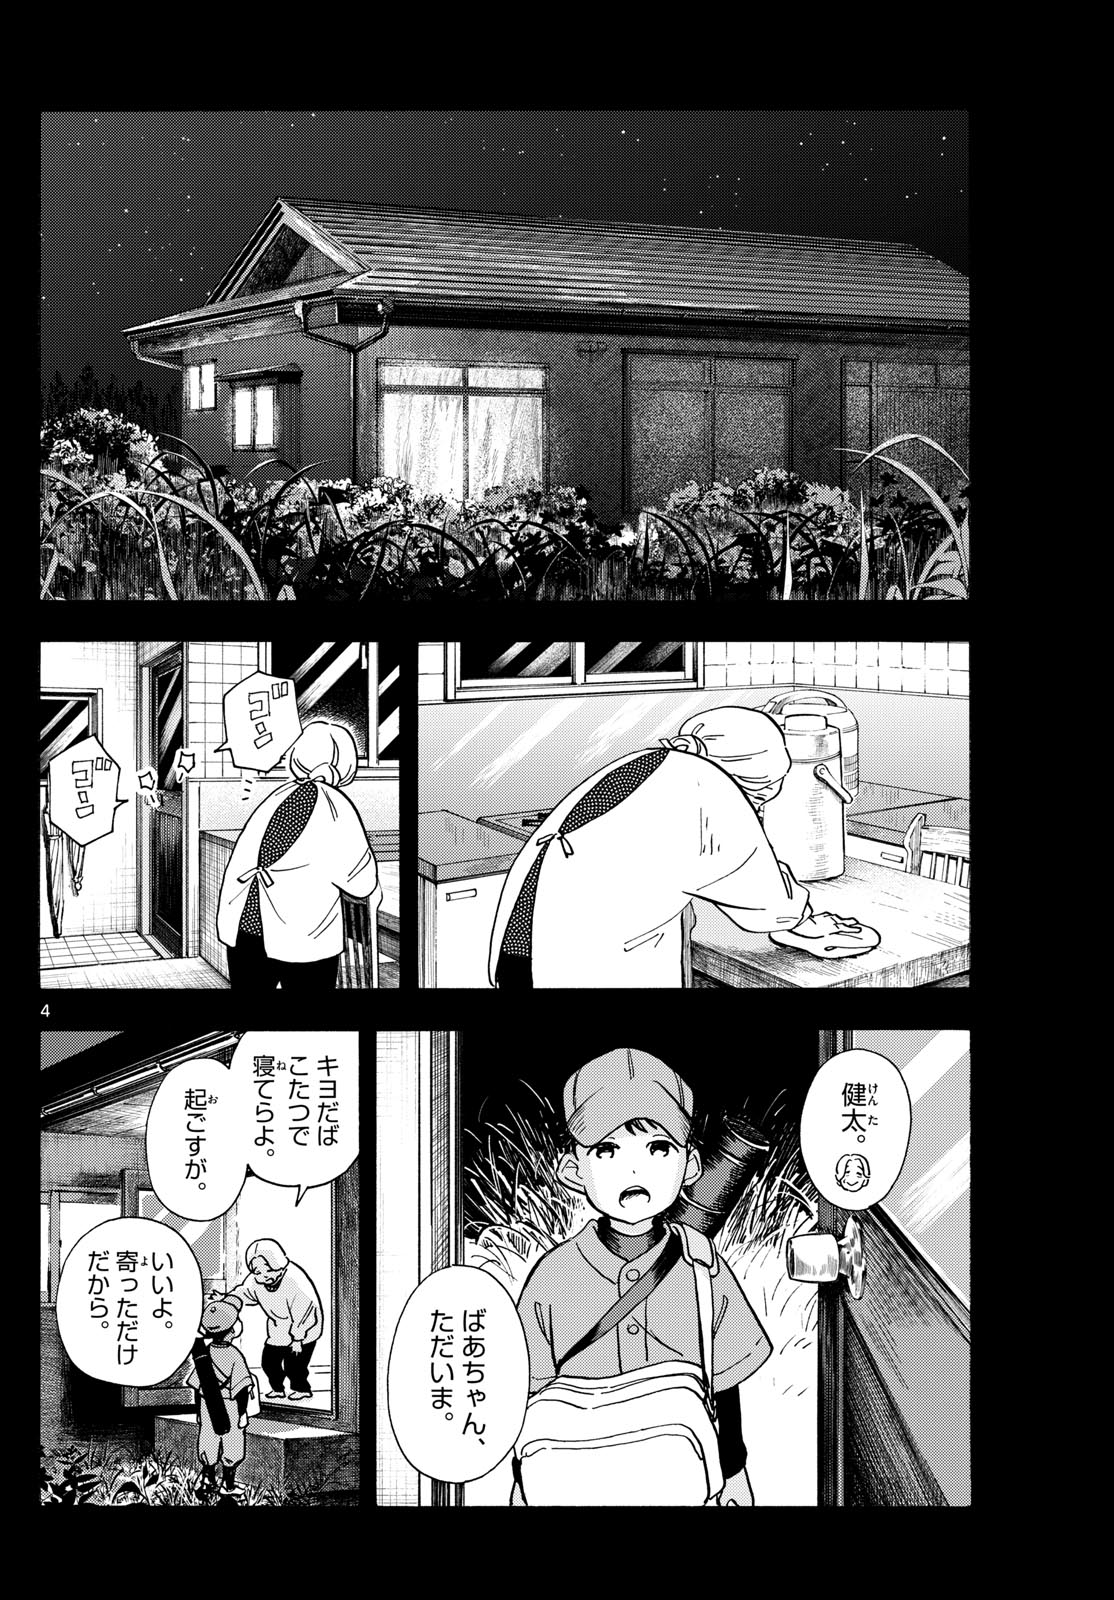 Maiko-san Chi no Makanai-san - Chapter 302 - Page 4